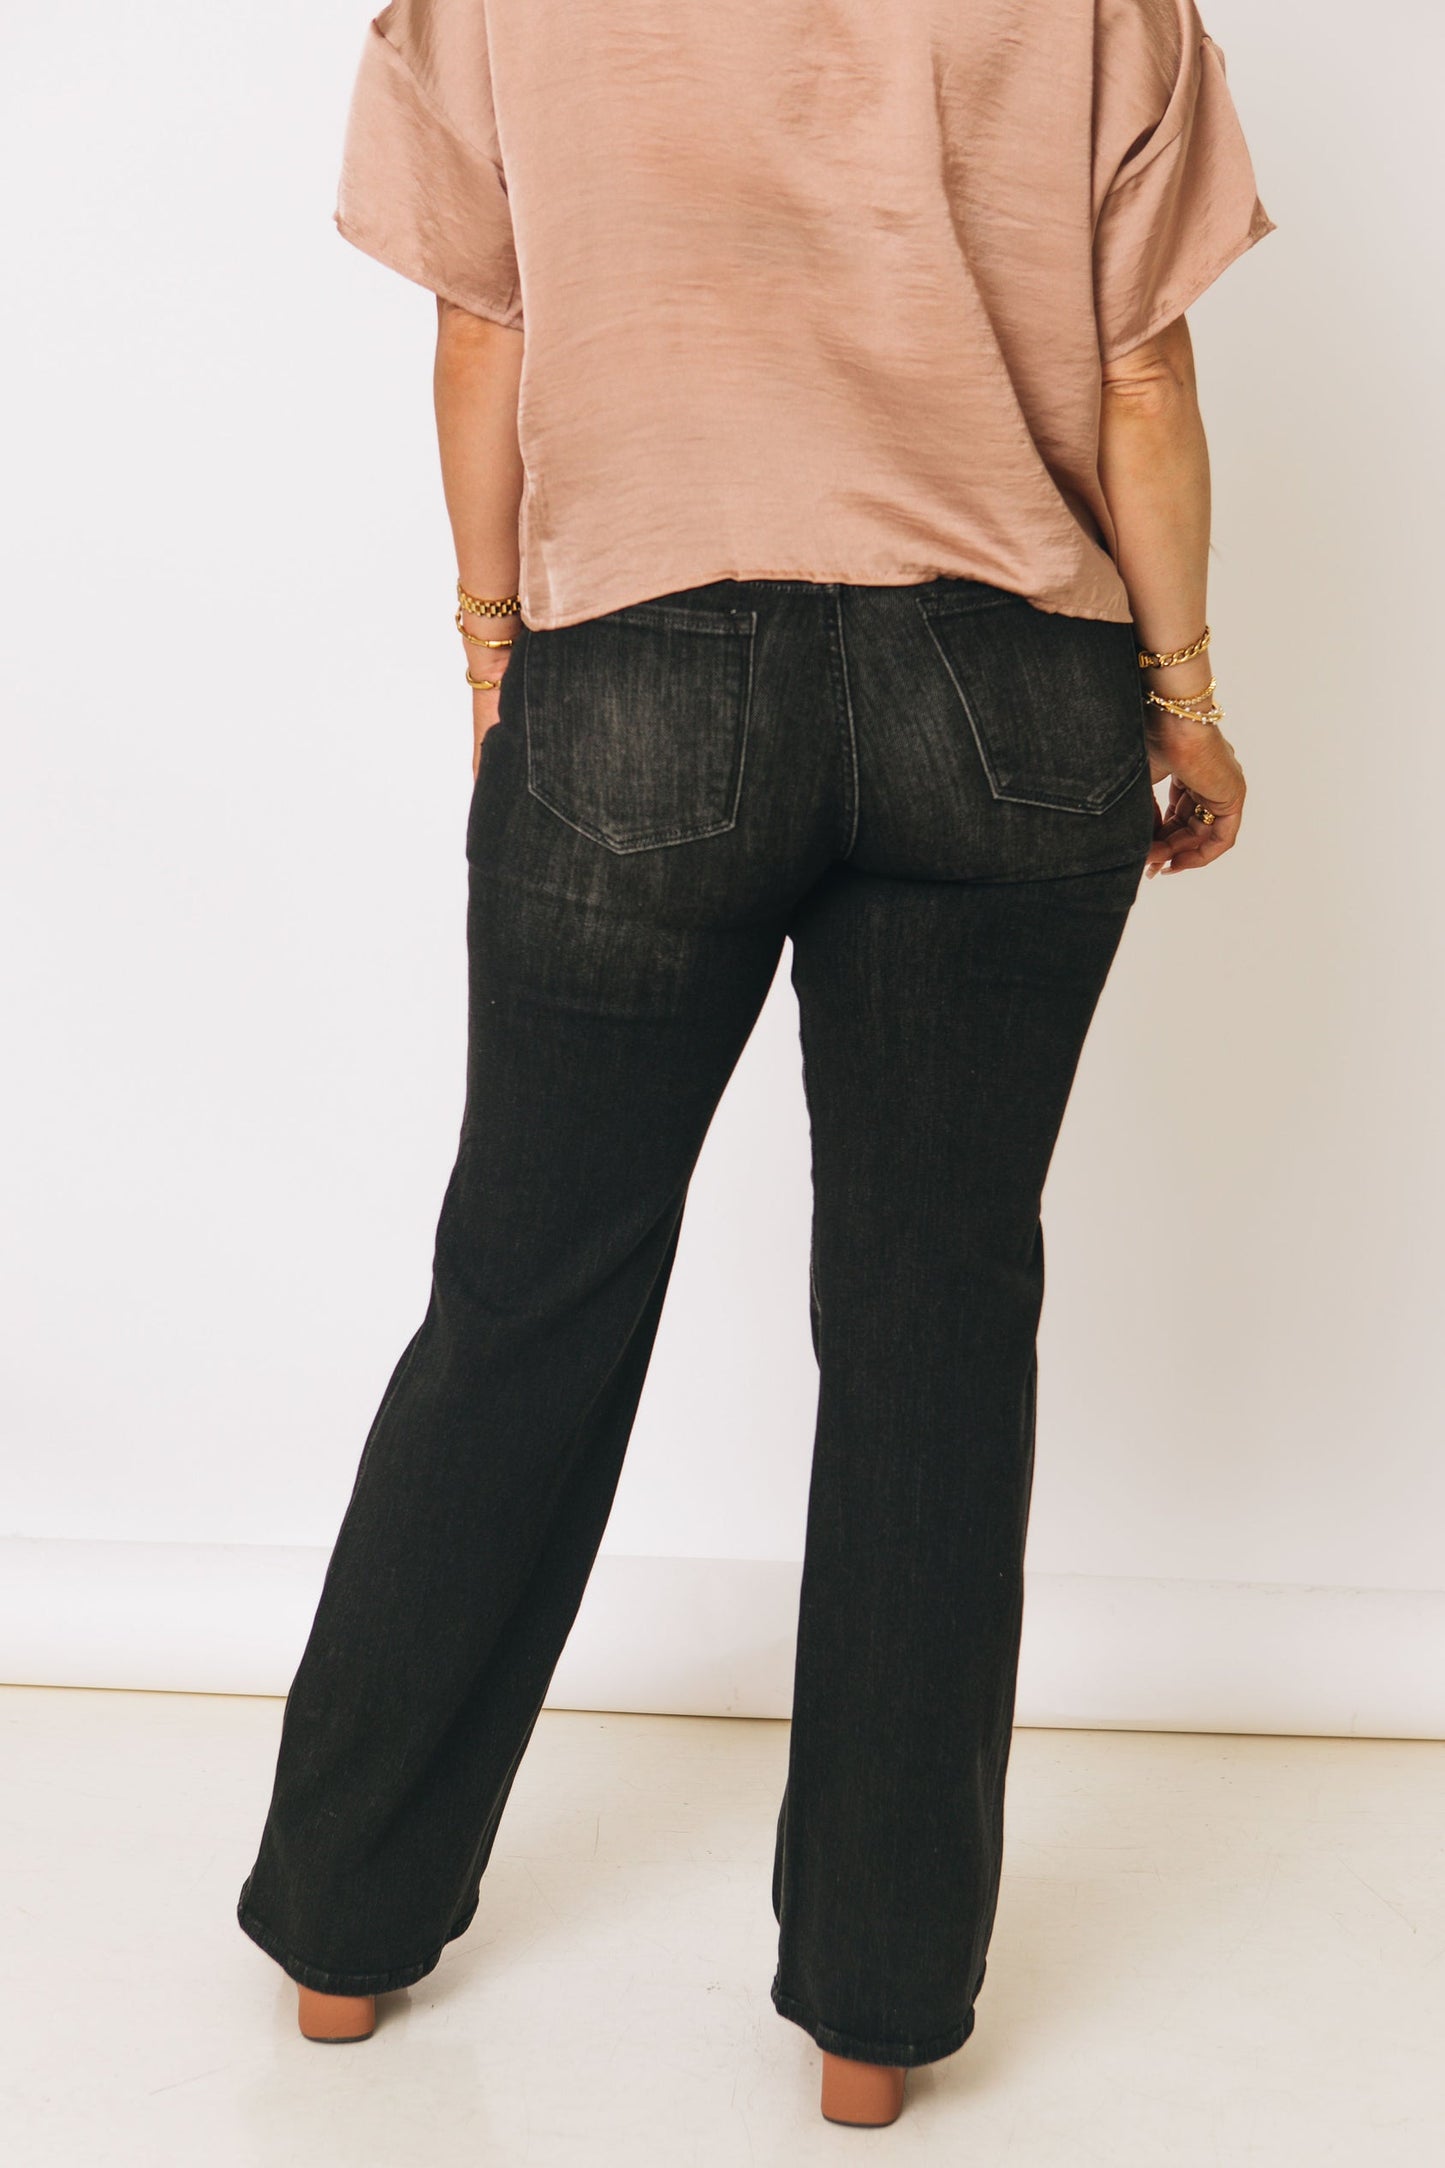 Risen - Steph's #1 Favorite Jeans EVER Black Wide Leg Jeans (0-3XL)